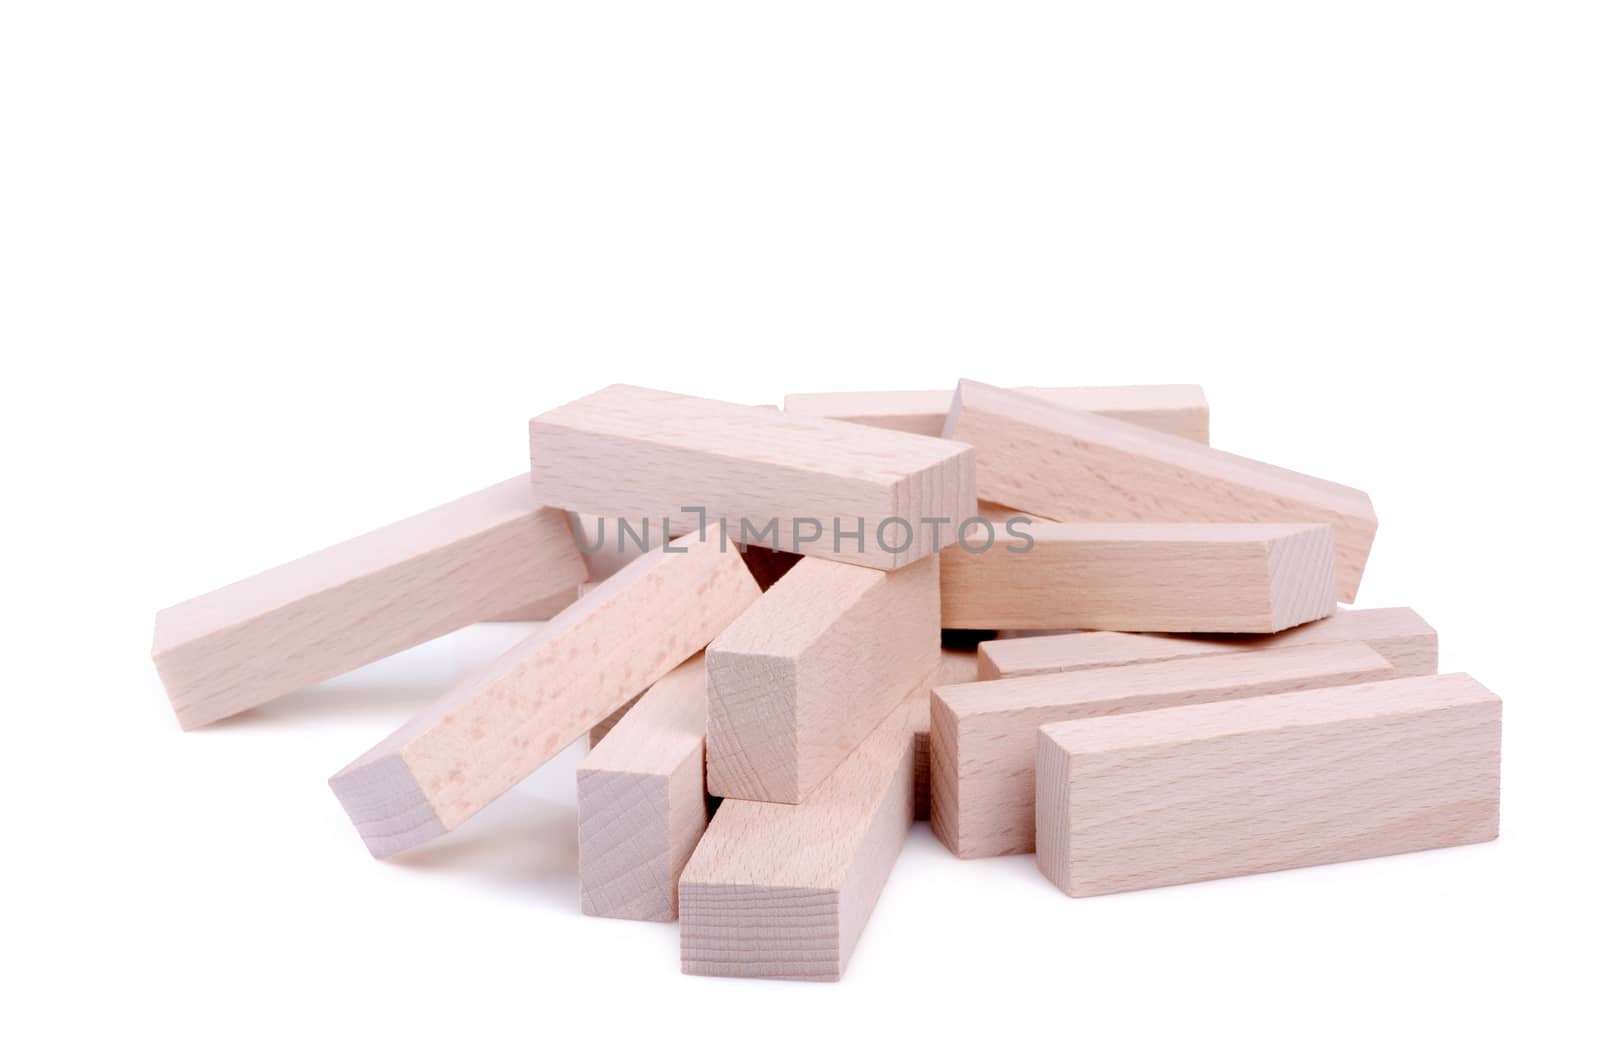 Wooden bricks by richpav